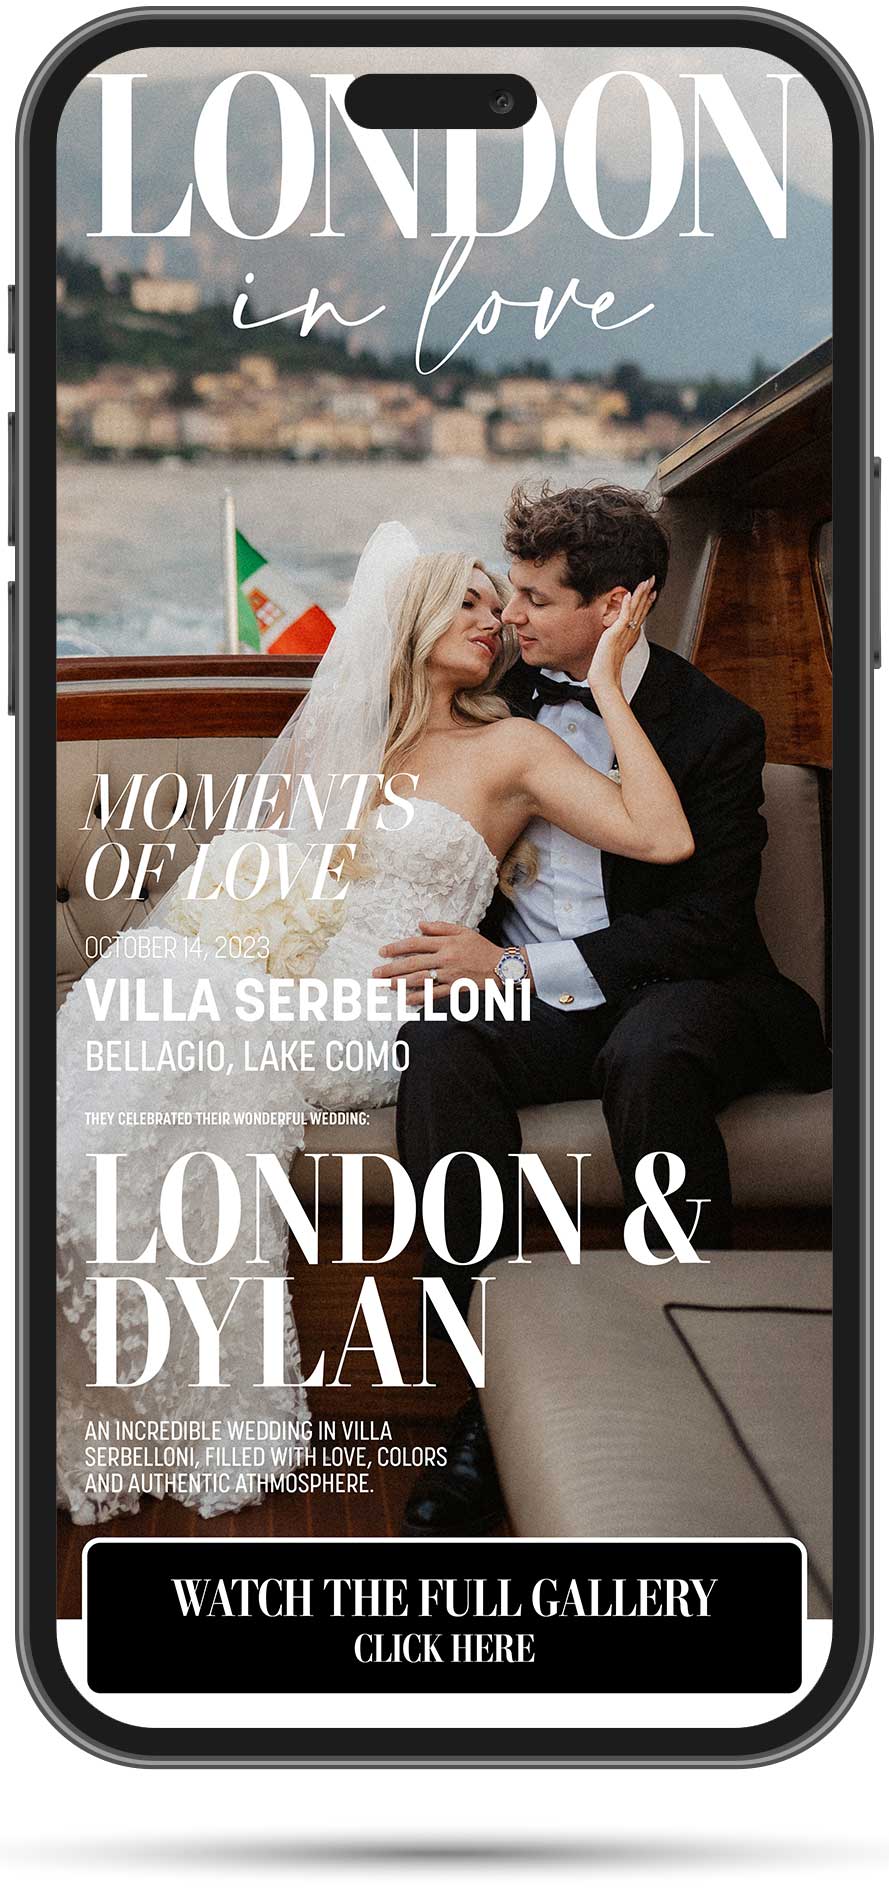 whatsapp wedding magazine london dylan001